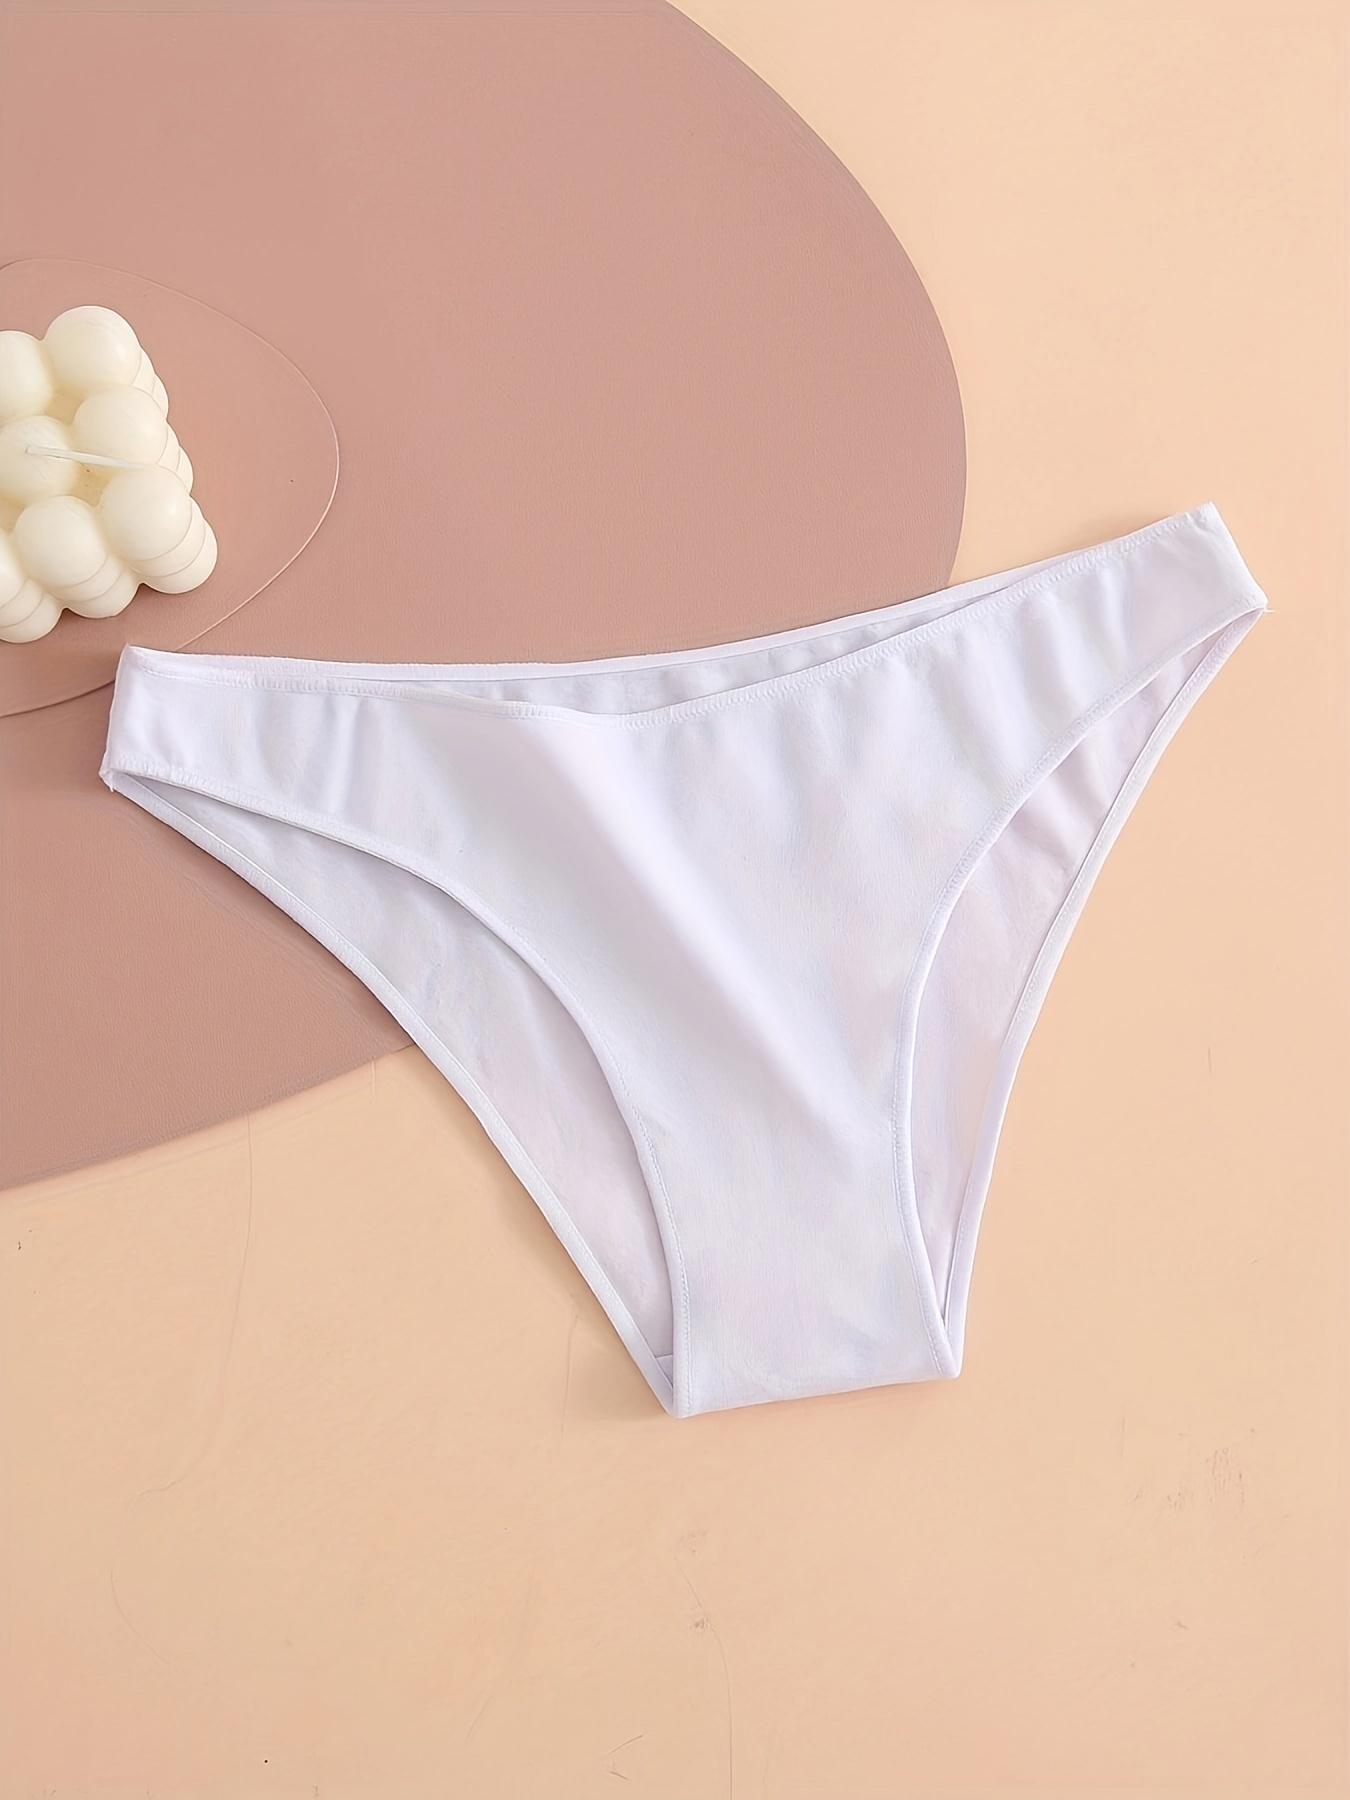 Women's Sports Panties, Cotton Sports Bottoms